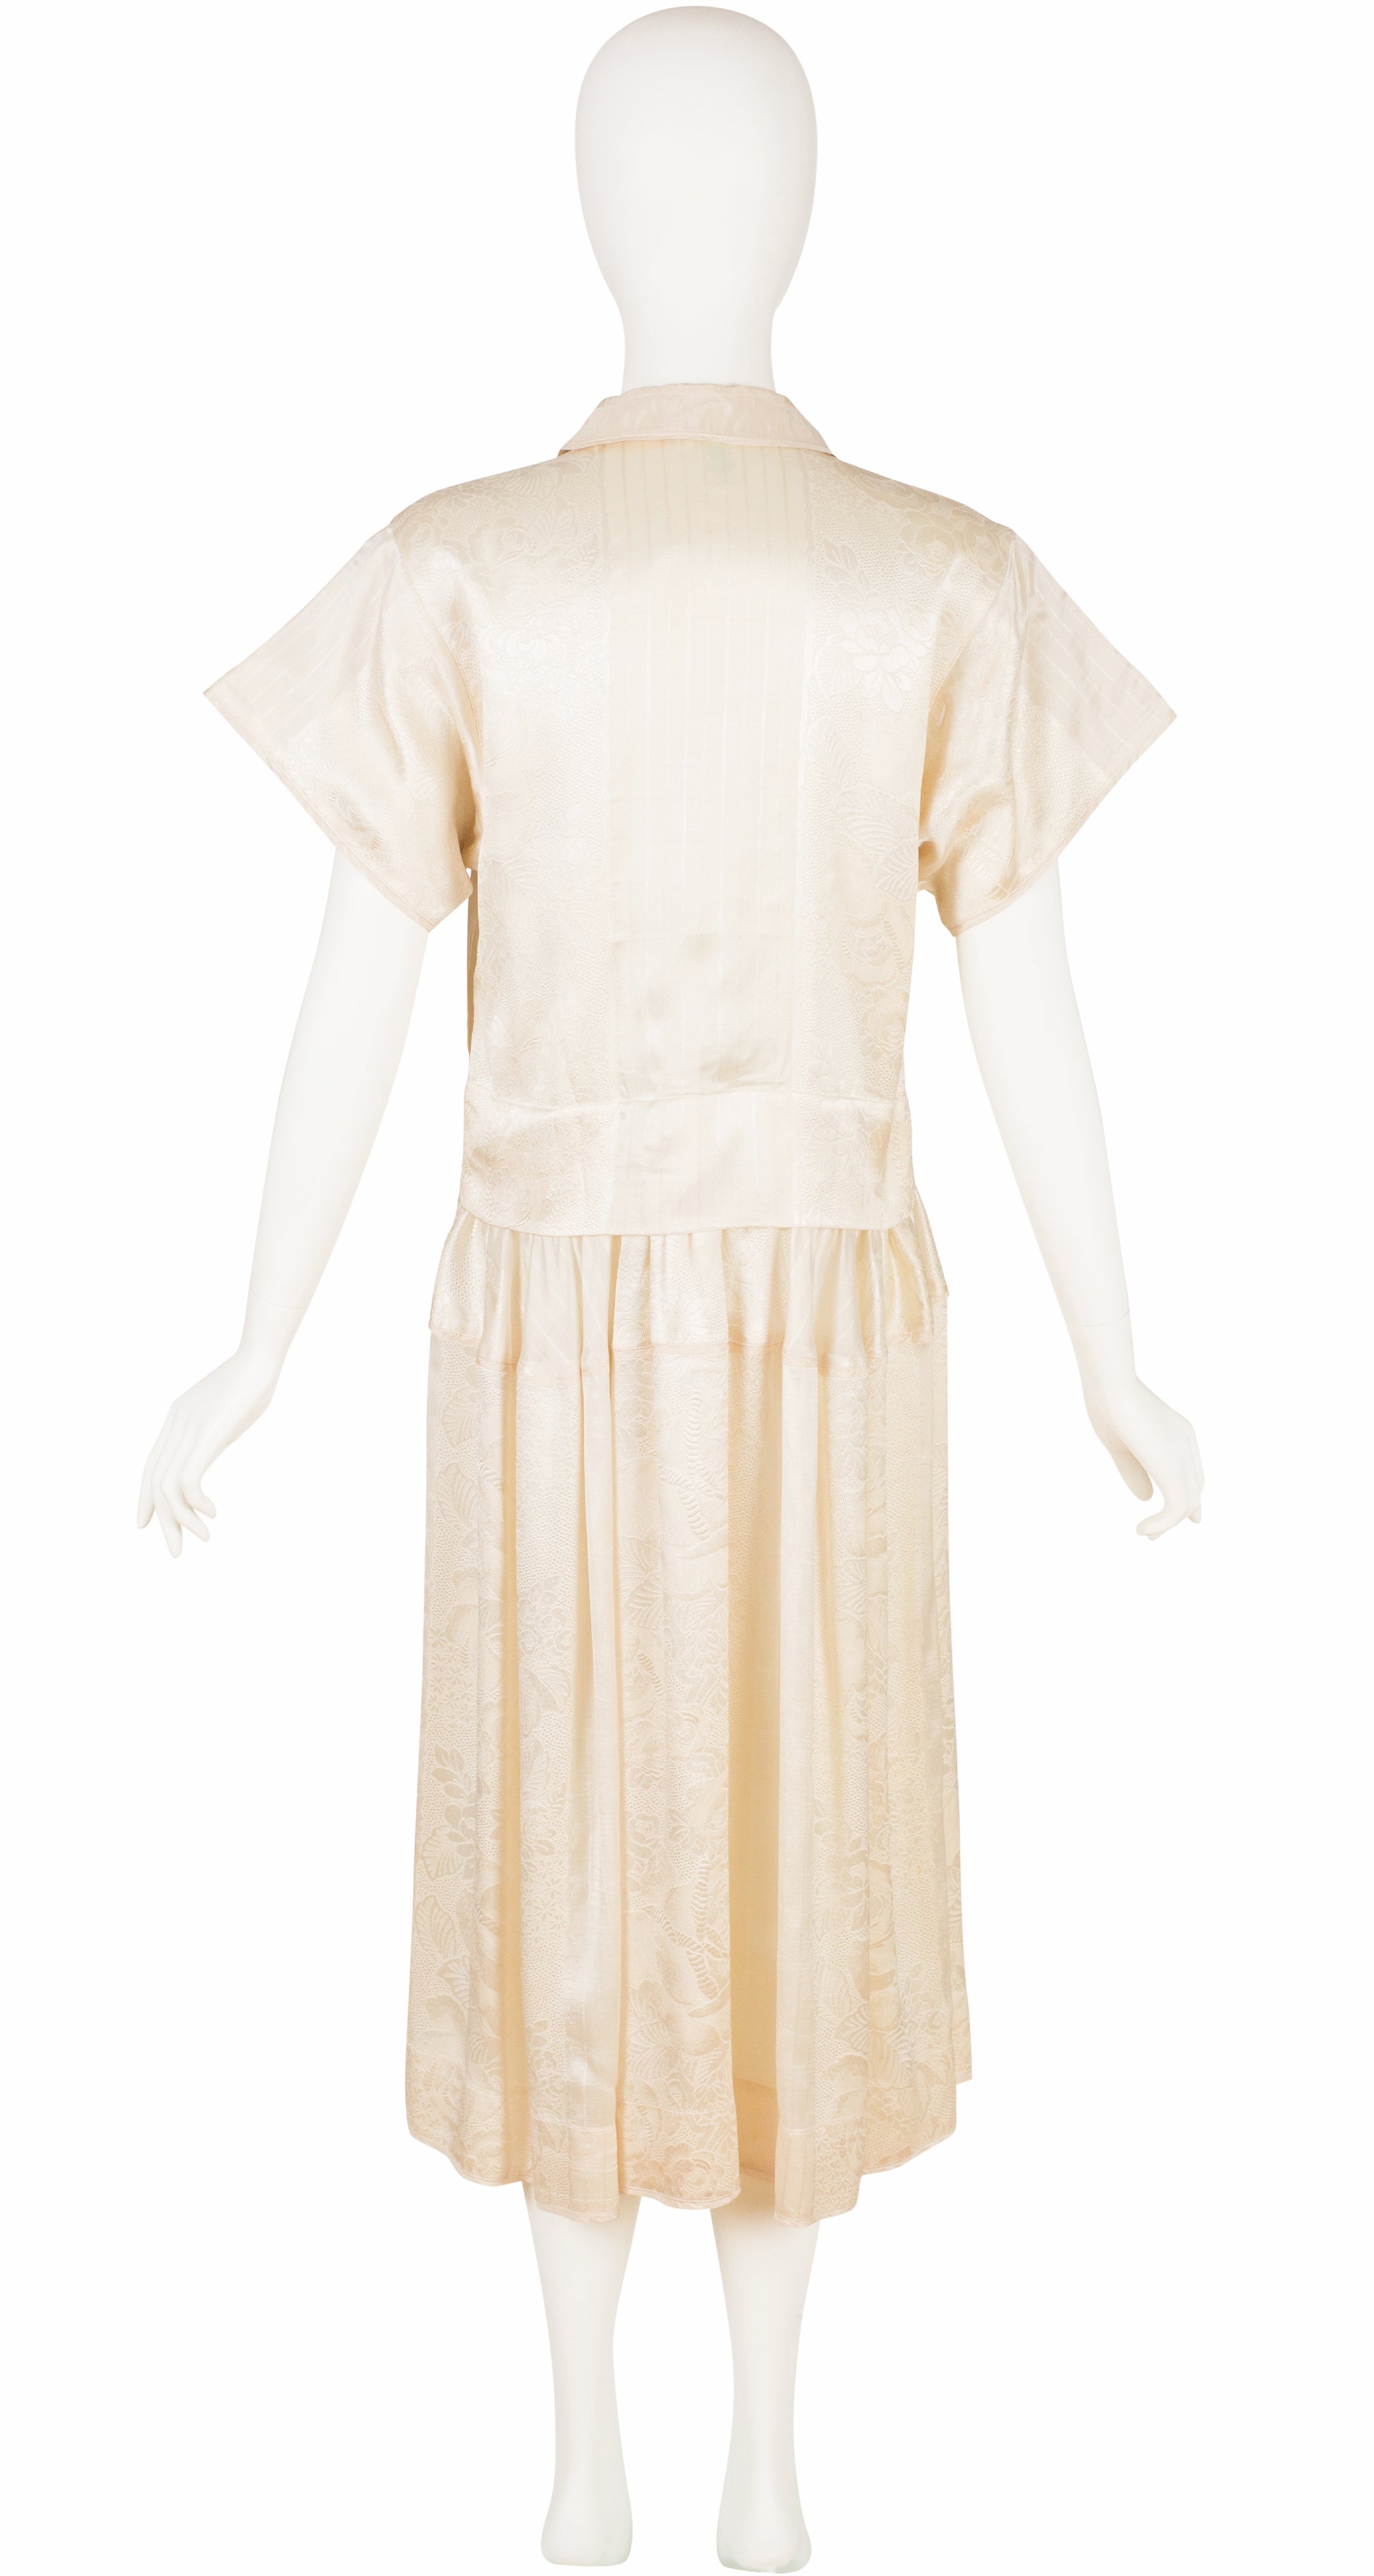 1982 S/S Runway Cream Floral Satin Jacquard Dress